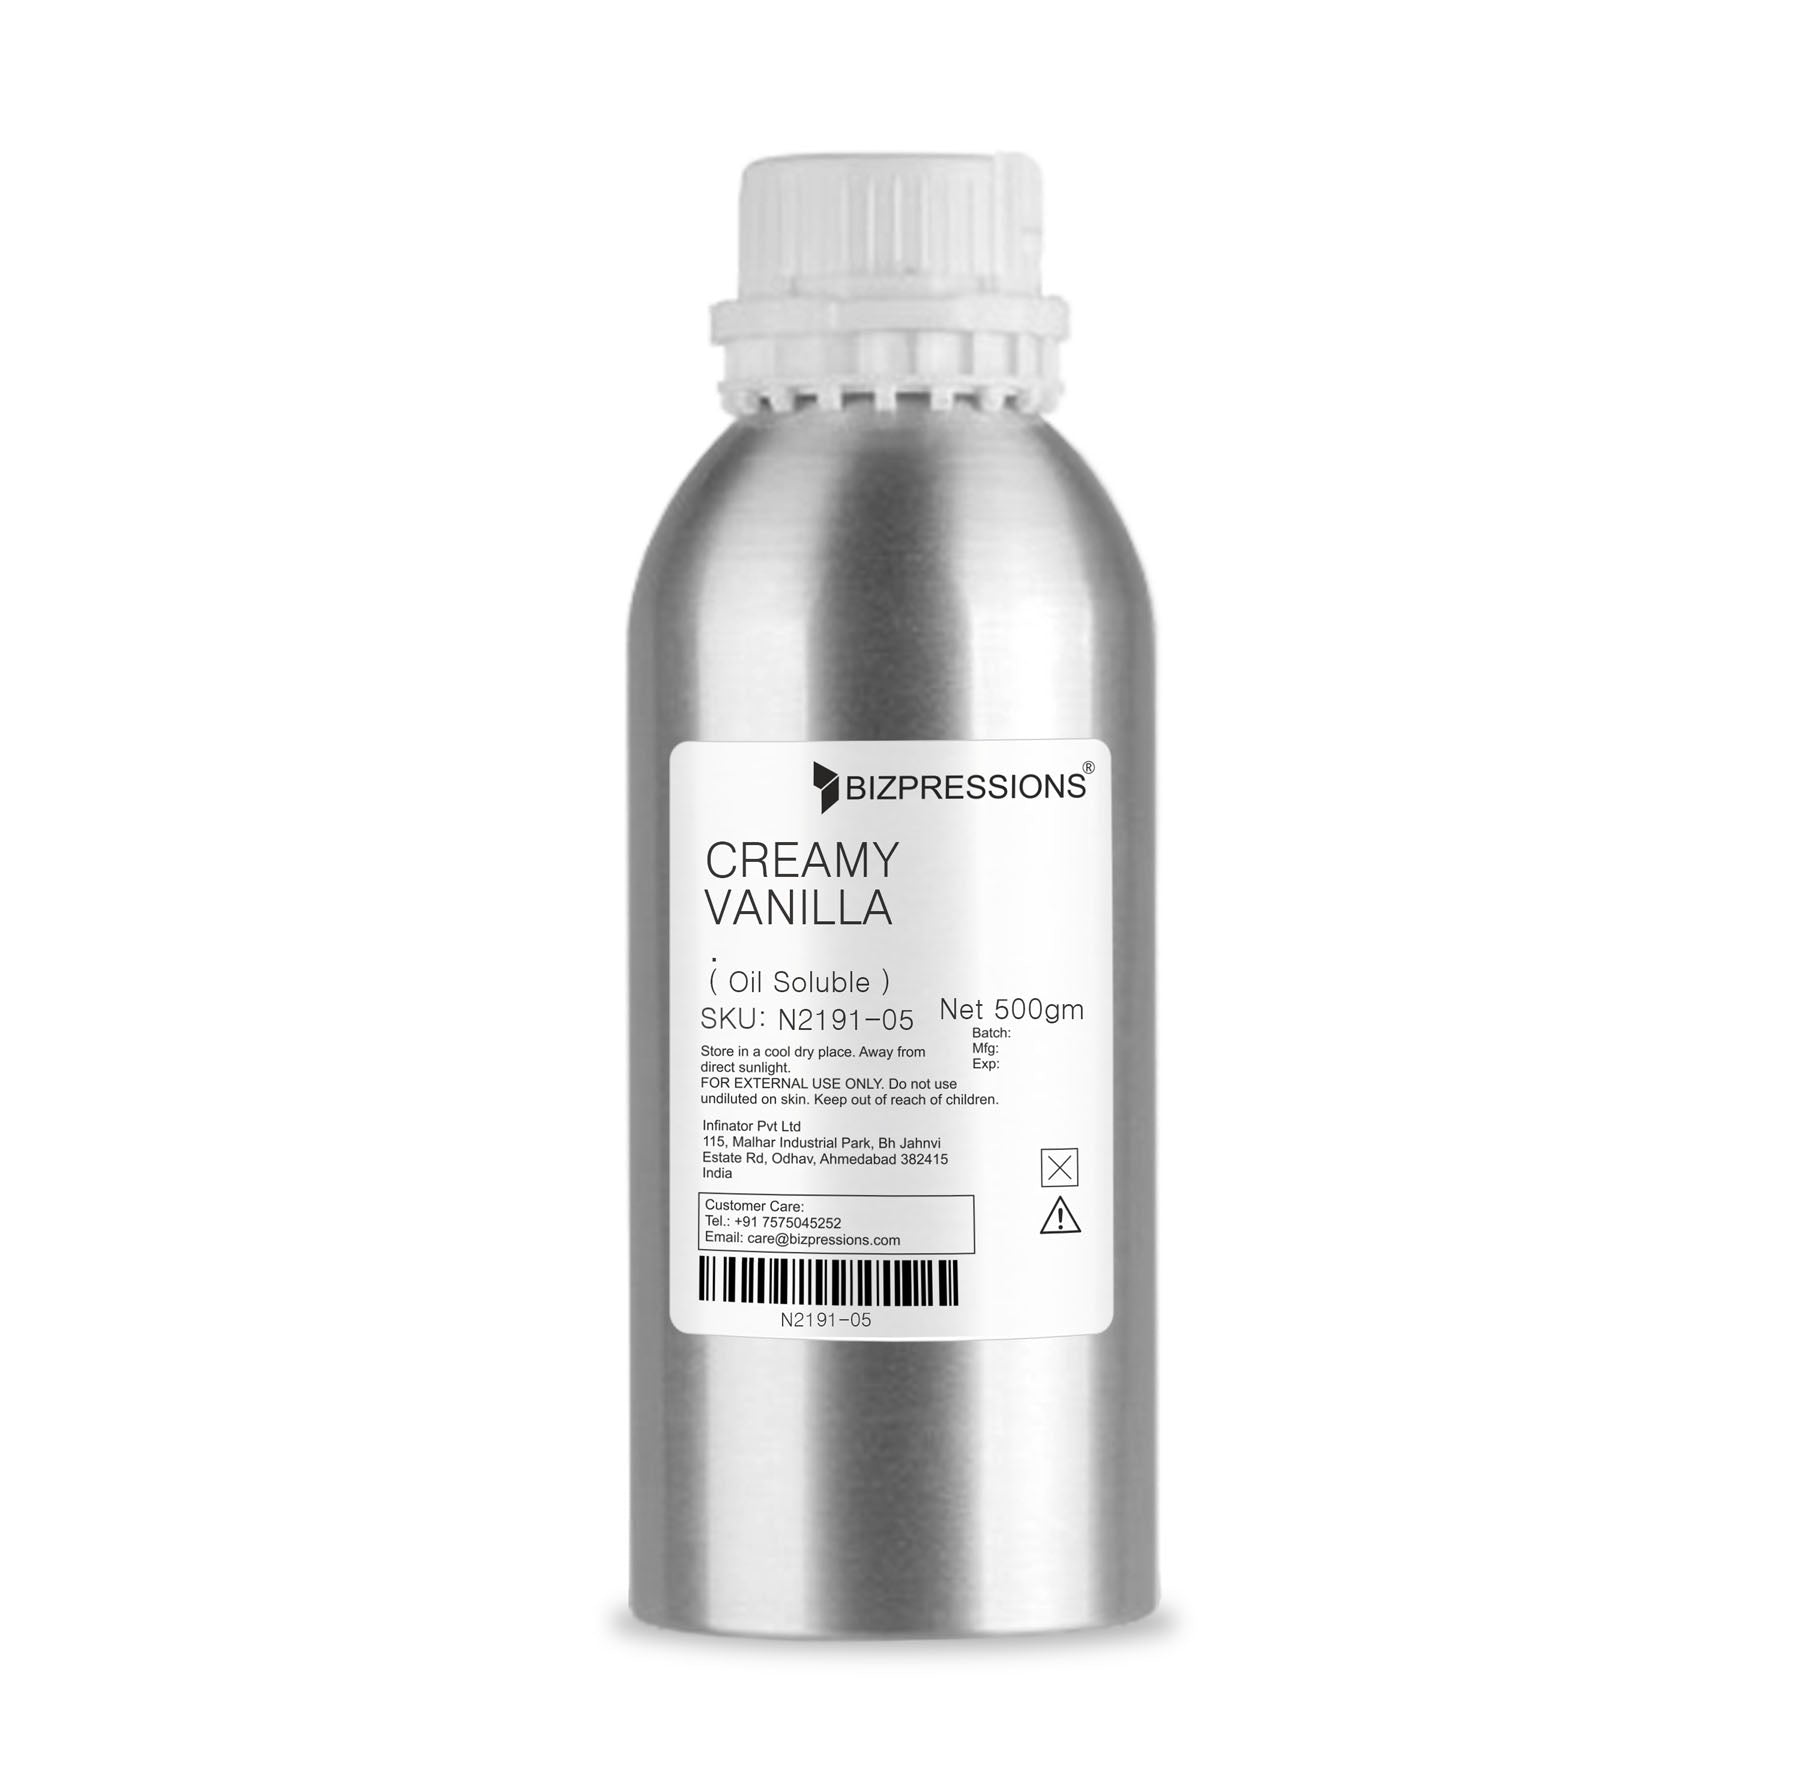 CREAMY VANILLA - Fragrance ( Oil Soluble ) - 500 gm